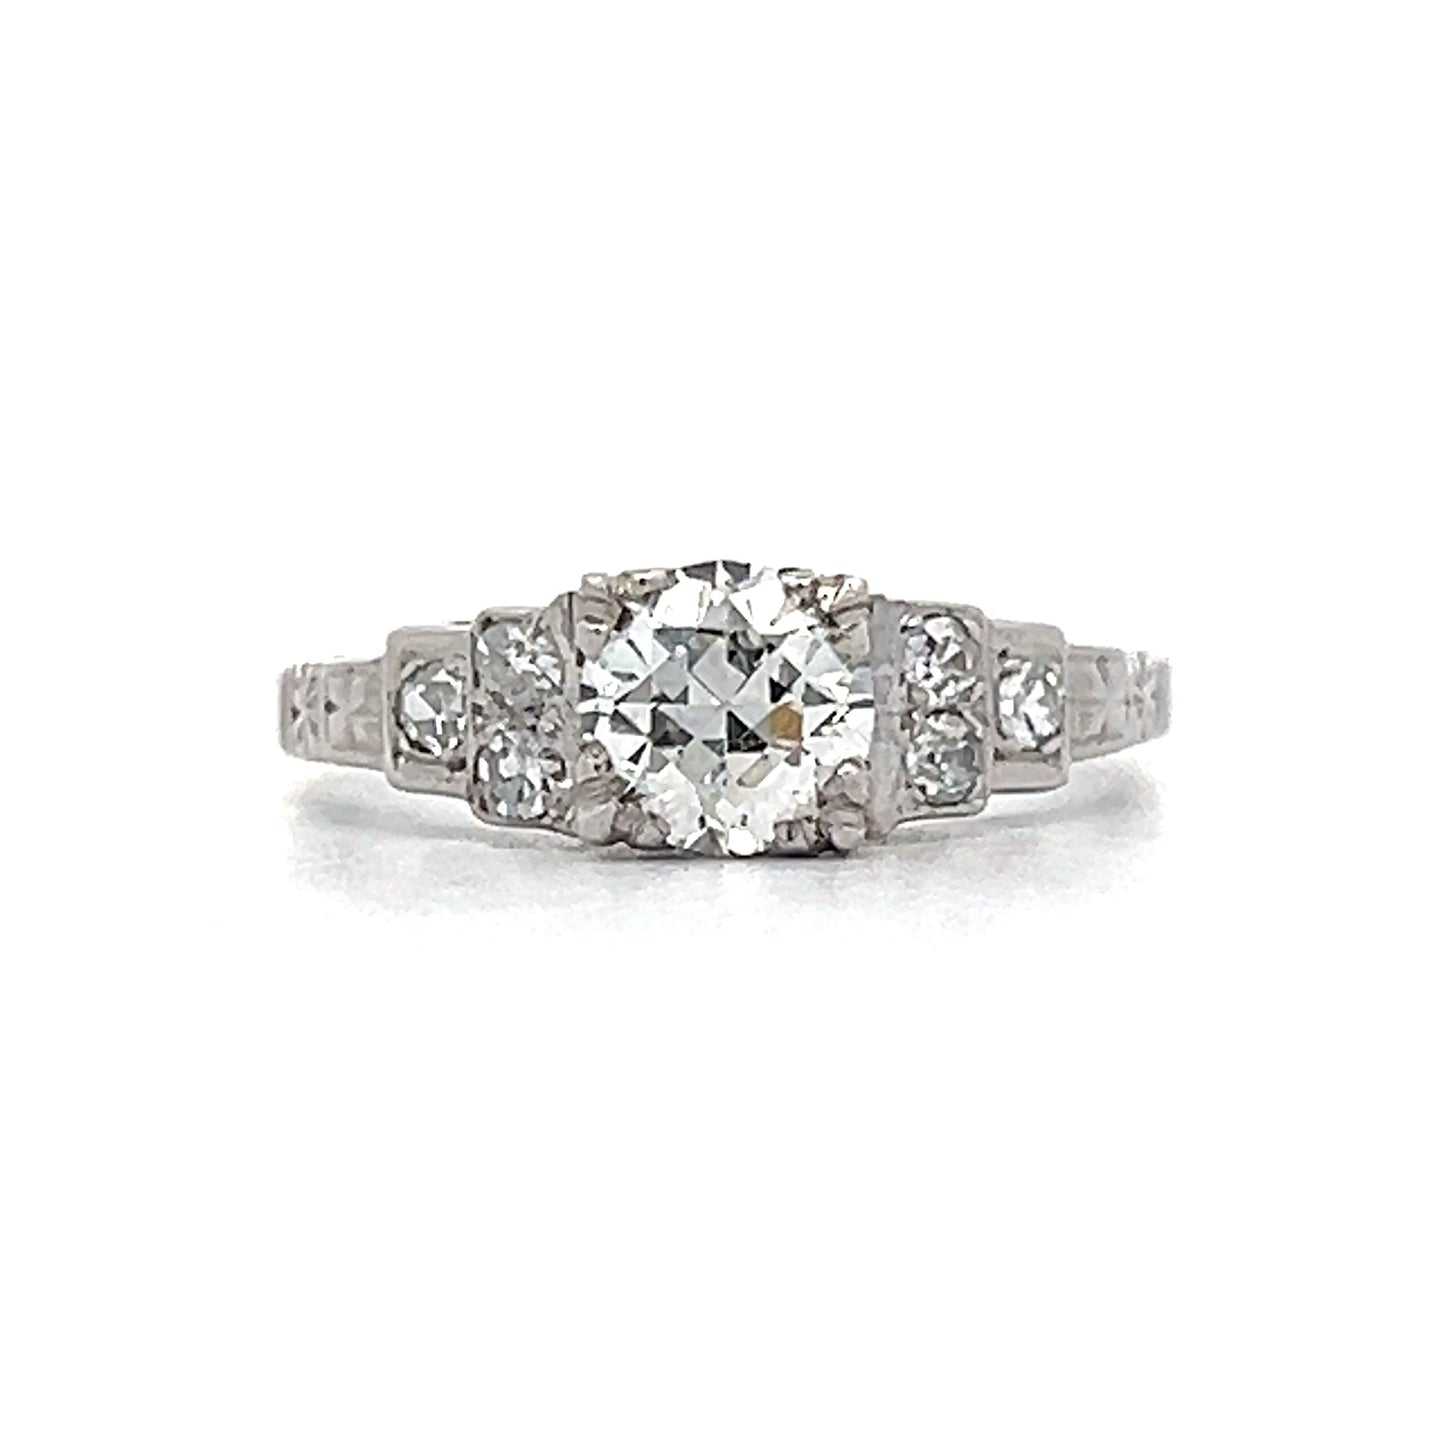 .65 Vintage Art Deco Engagement Ring in 18k White Gold